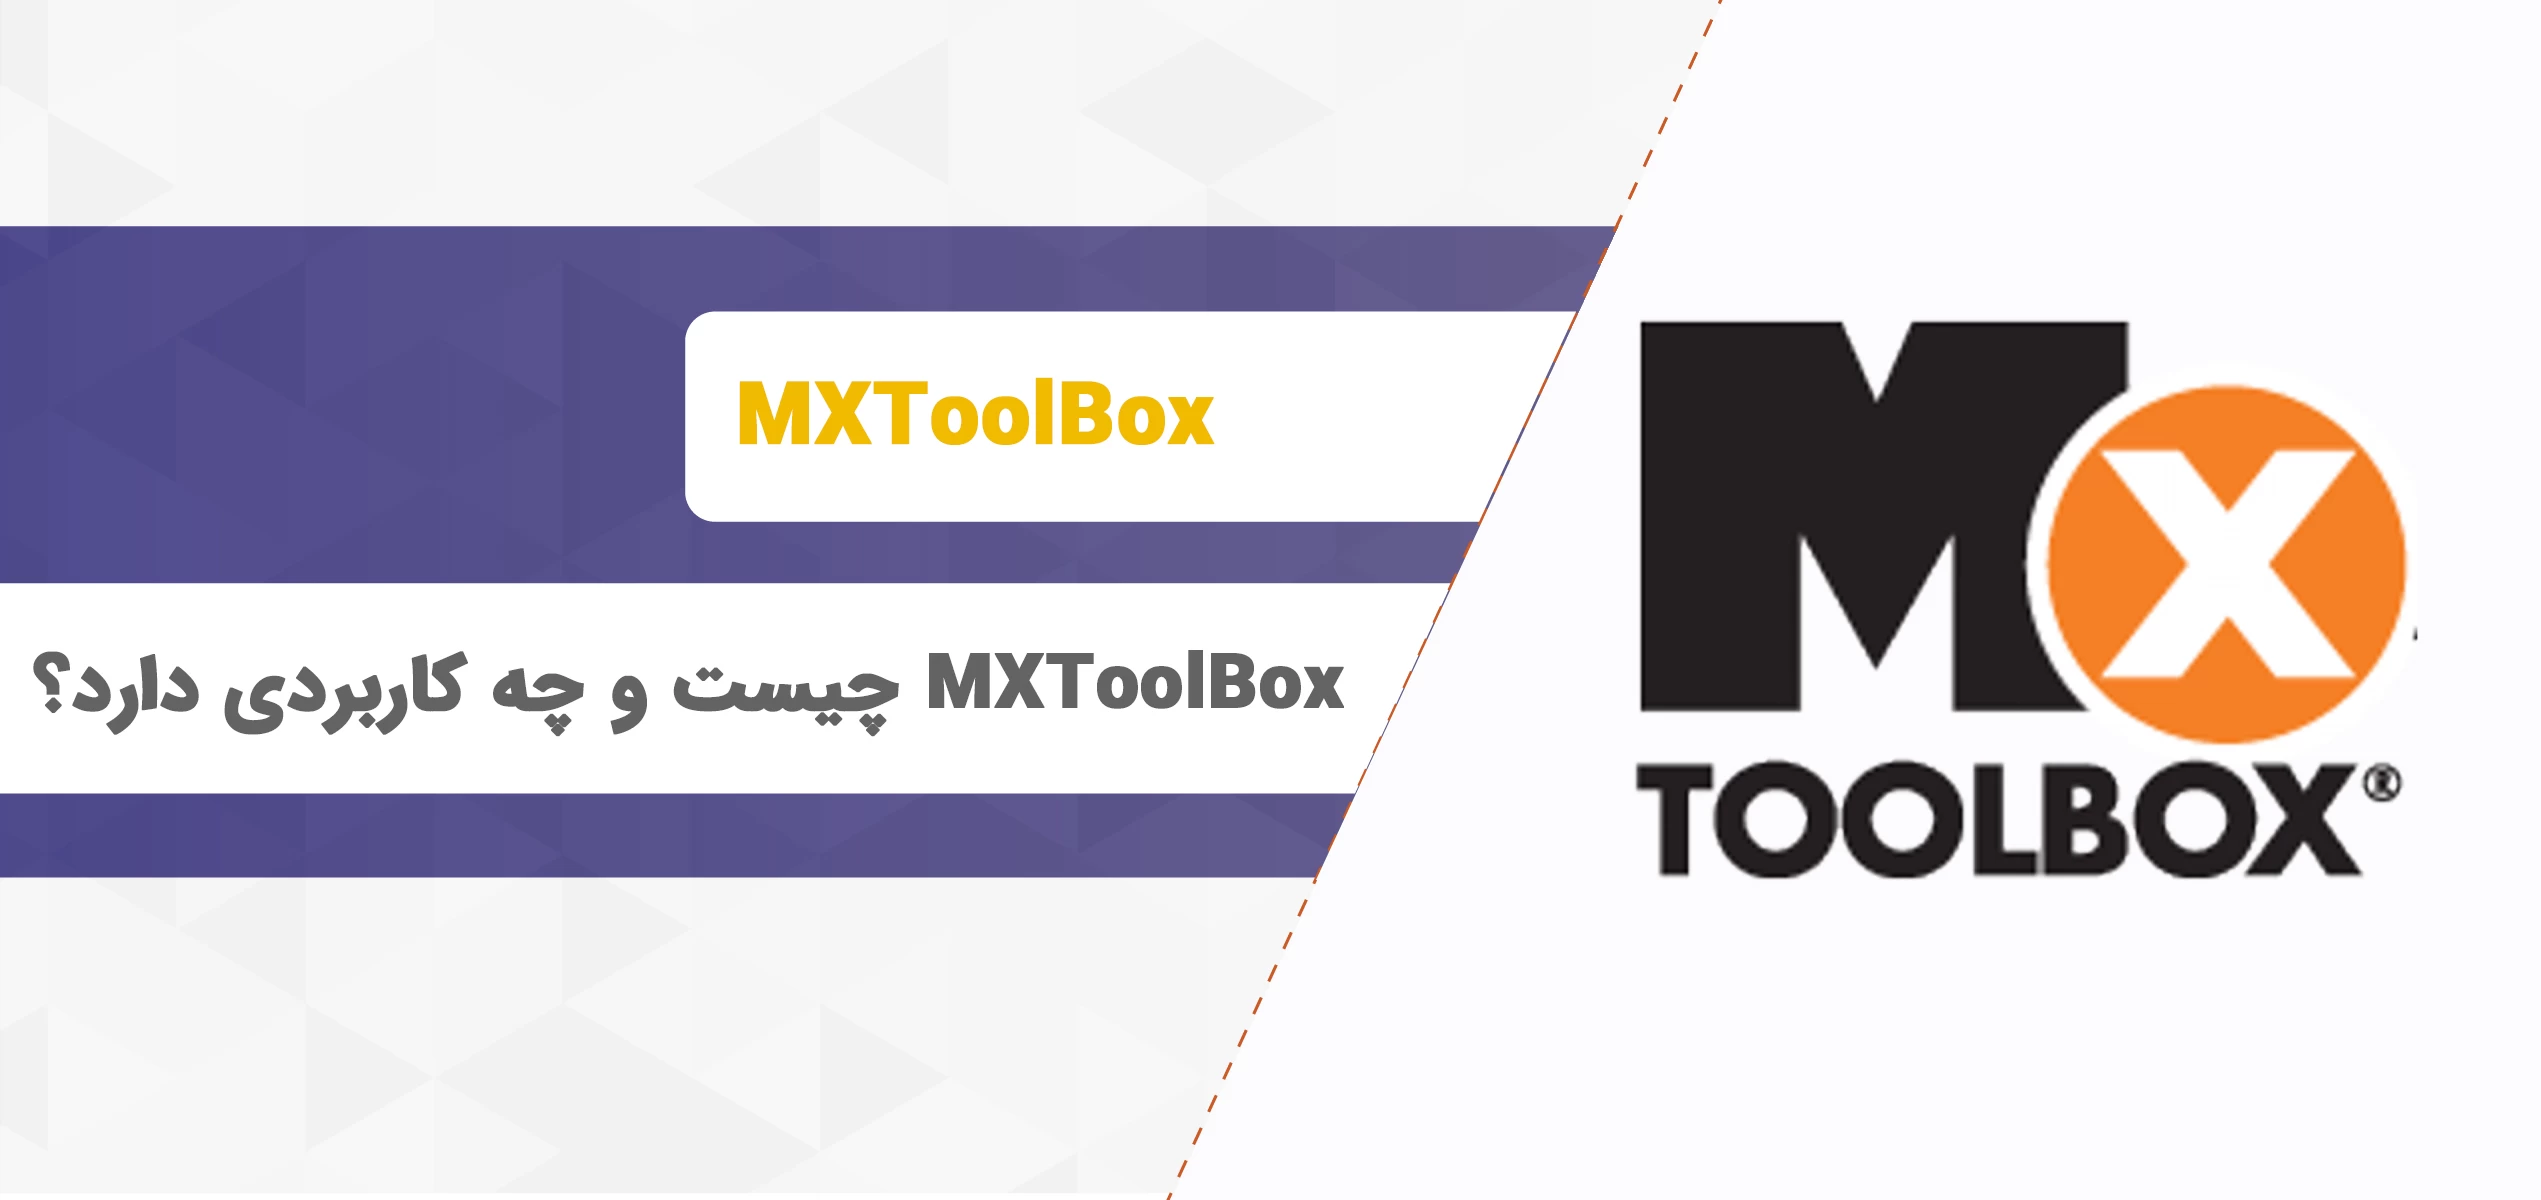 MXToolBox چیست؟معرفی mxtoolbox جهت رفع بلاک لیست IP ایمیل